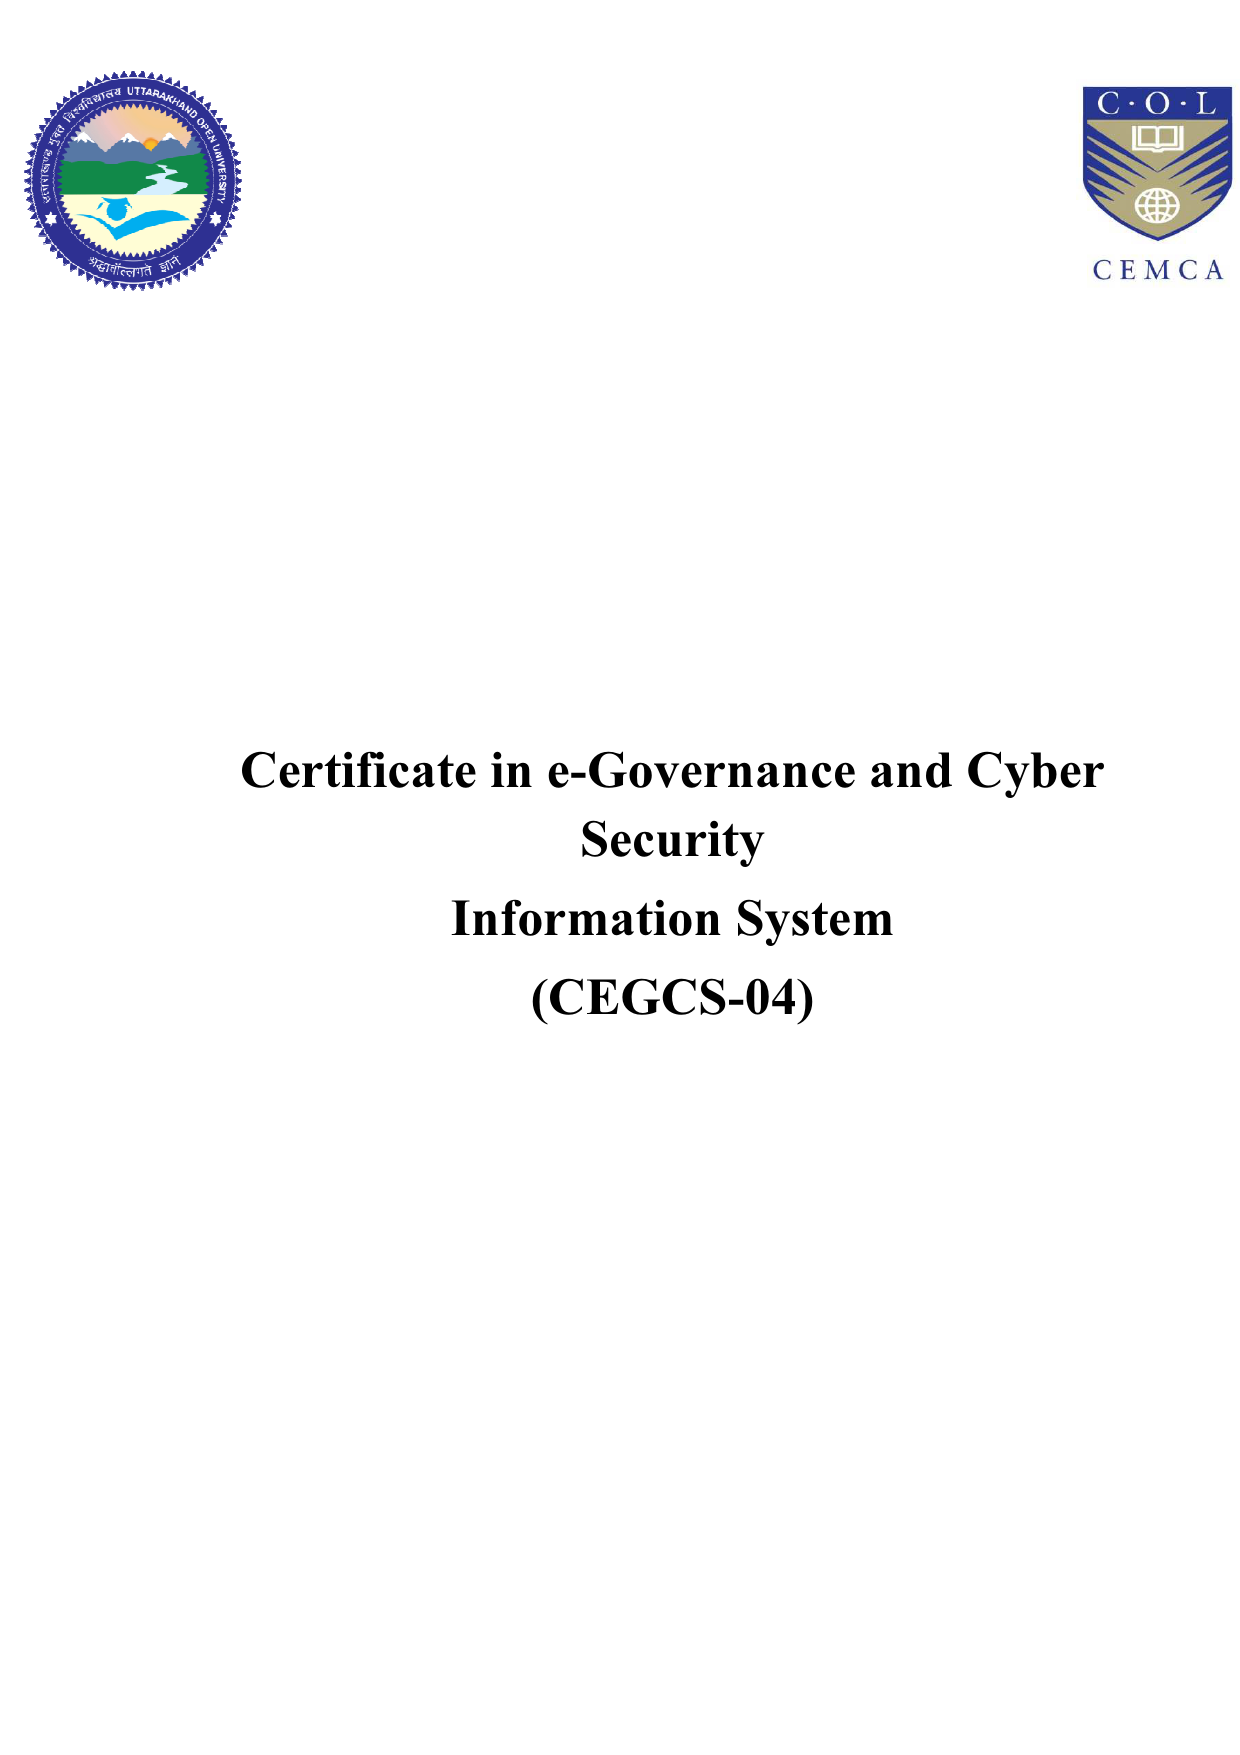 Certificate In E Certificate In E Governance And Security Manualzz